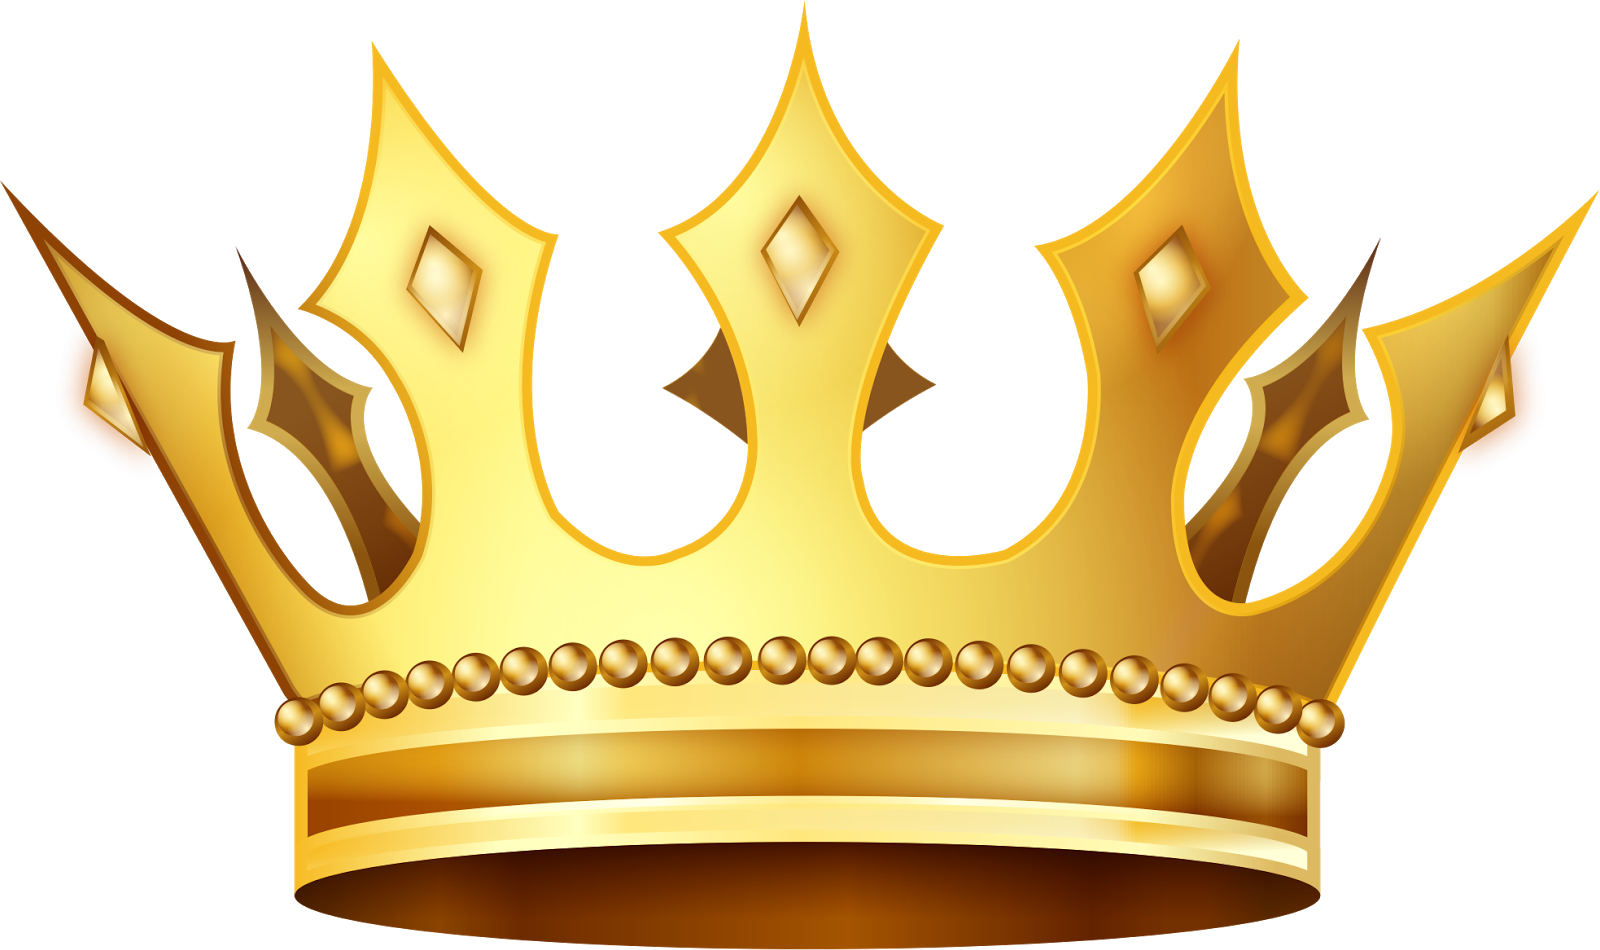 символ корона для ников пабг фото 49